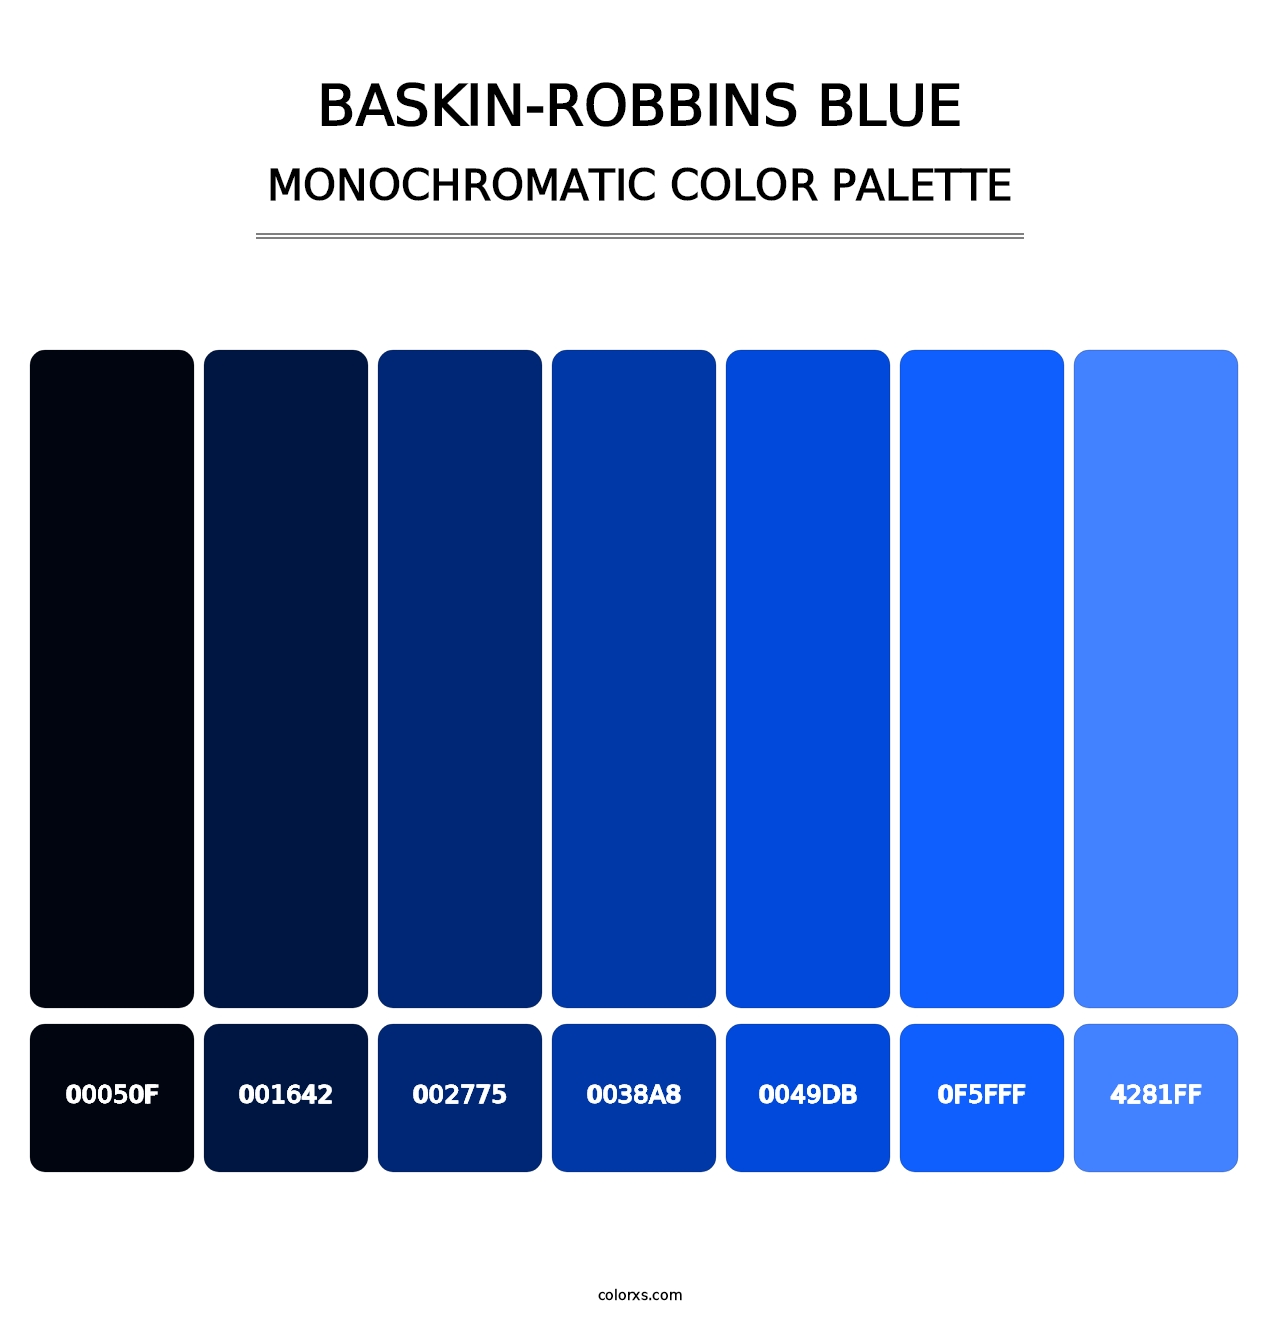 Baskin-Robbins Blue - Monochromatic Color Palette